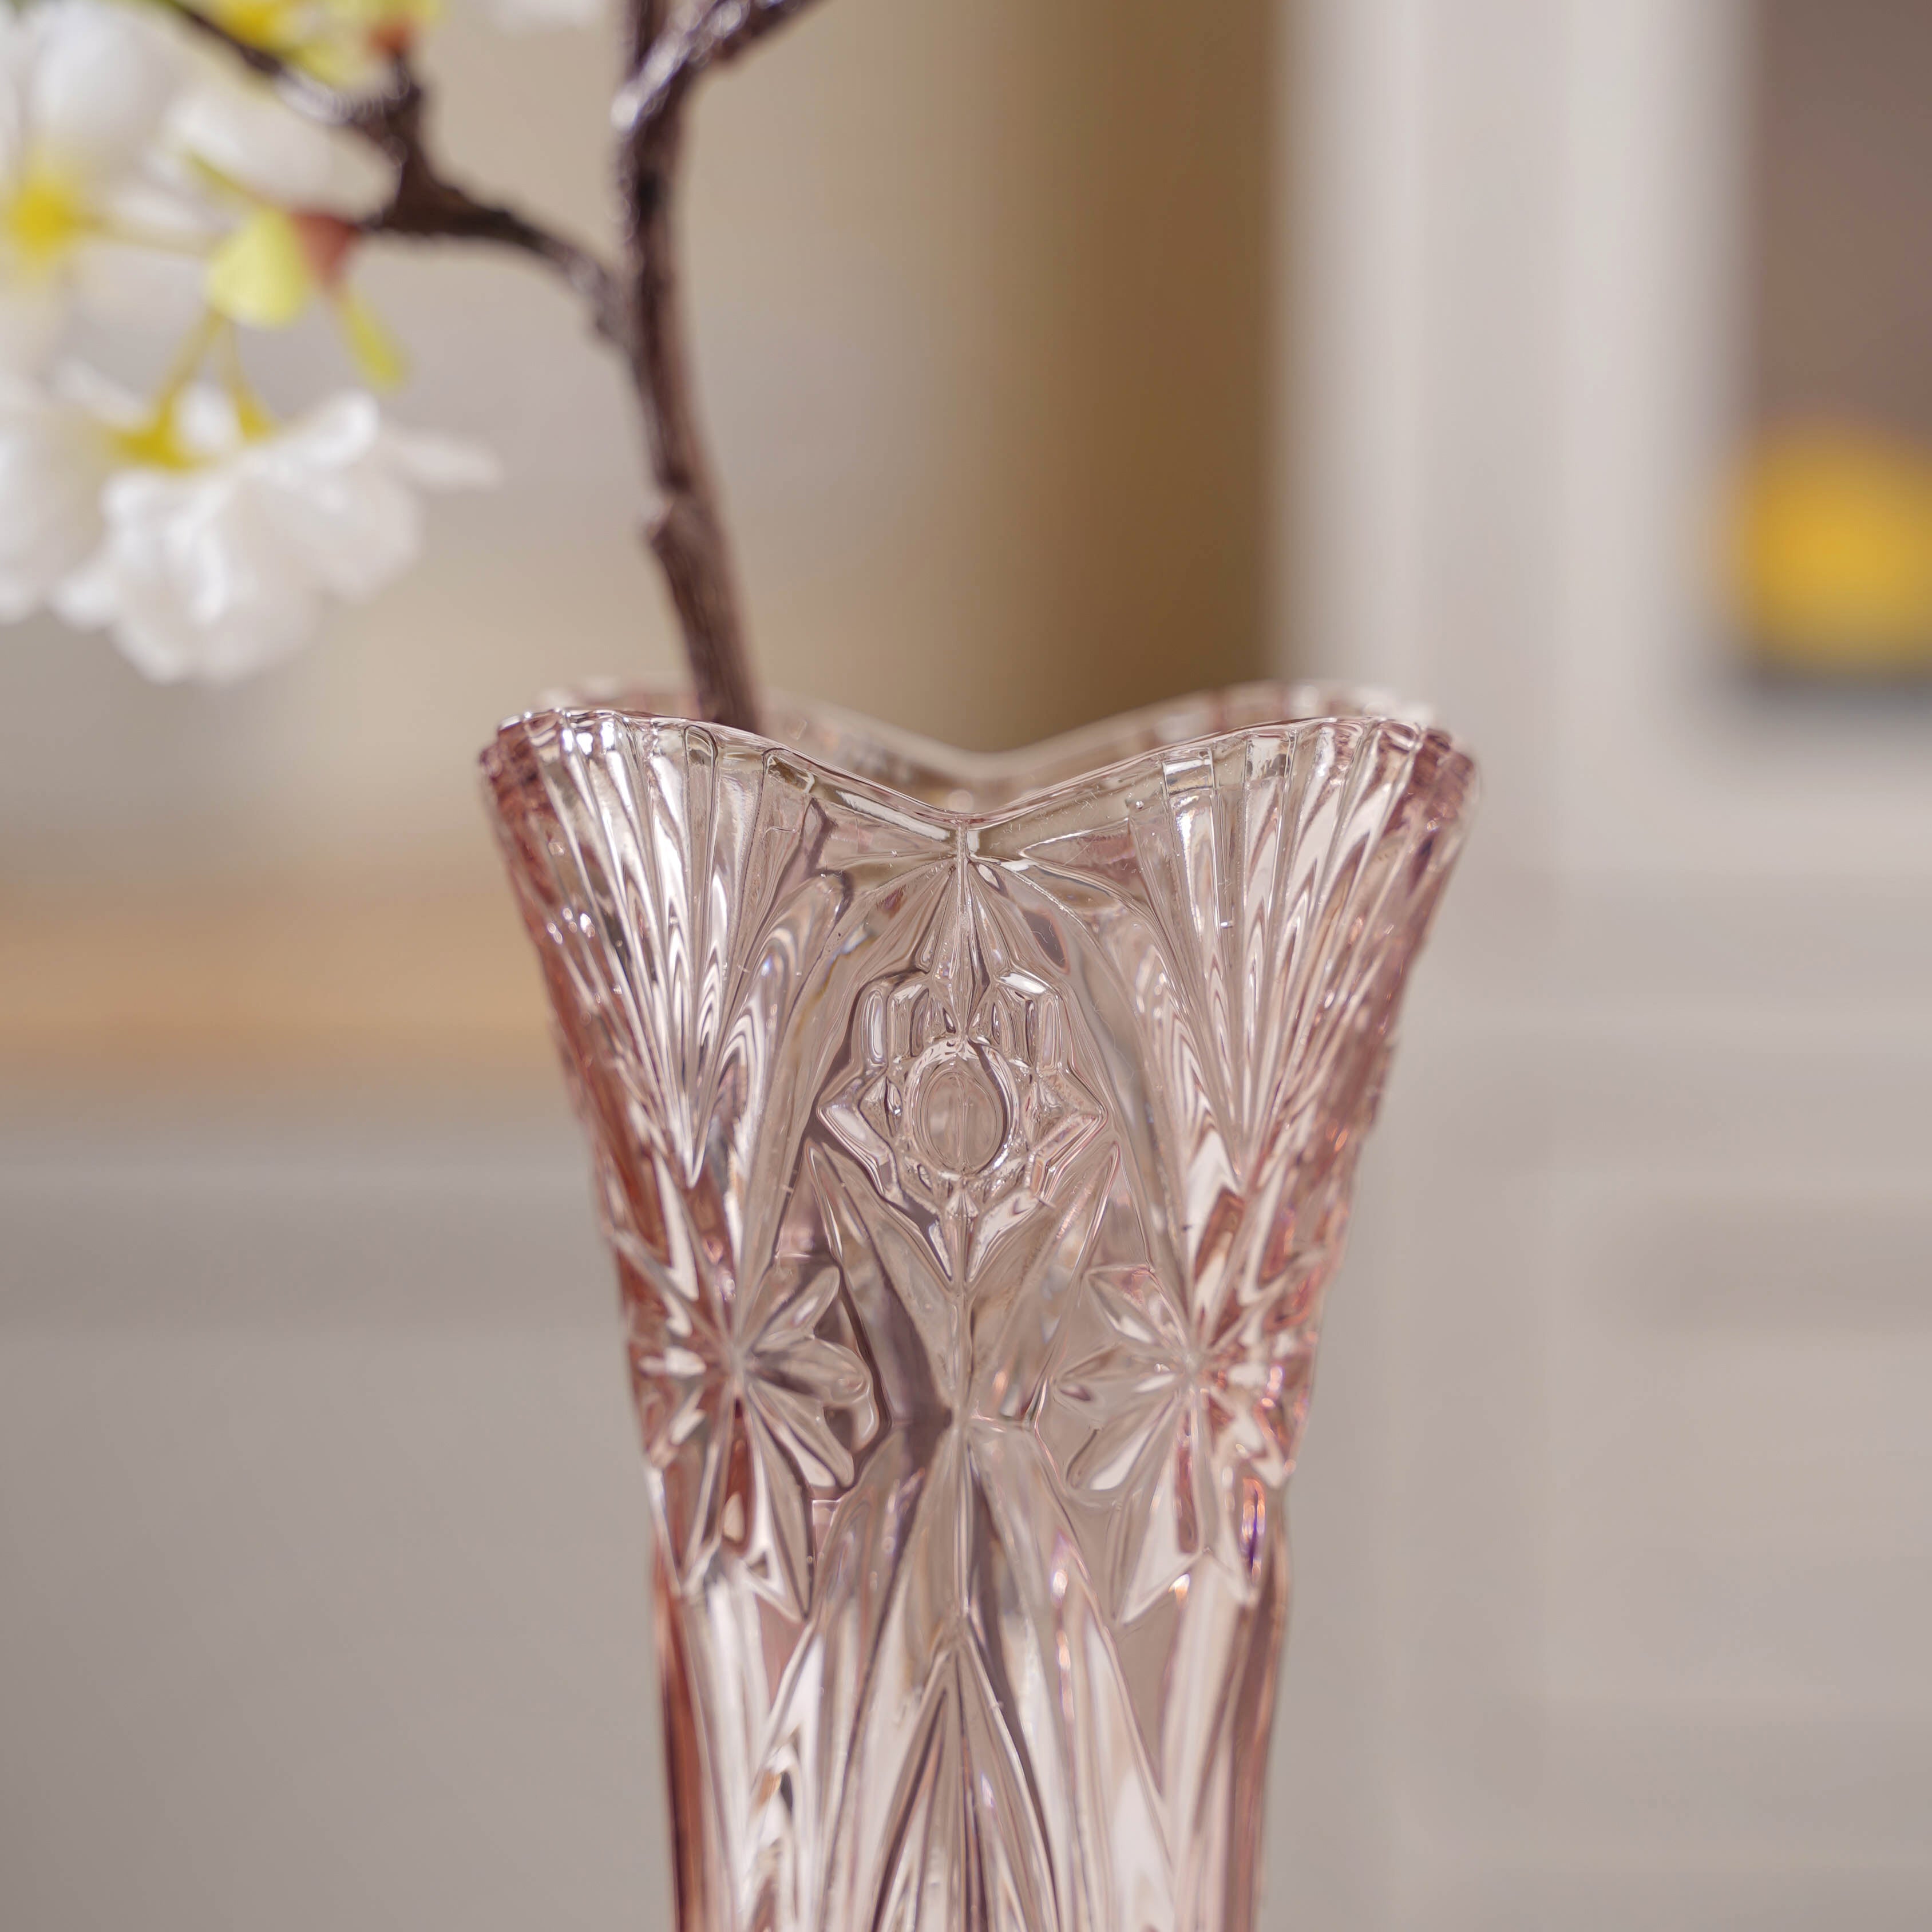 50 + beautiful flower vase arrangement for your home decoration - SooPush |  Glass vase decor, Glass floor vase, Floor vase decor